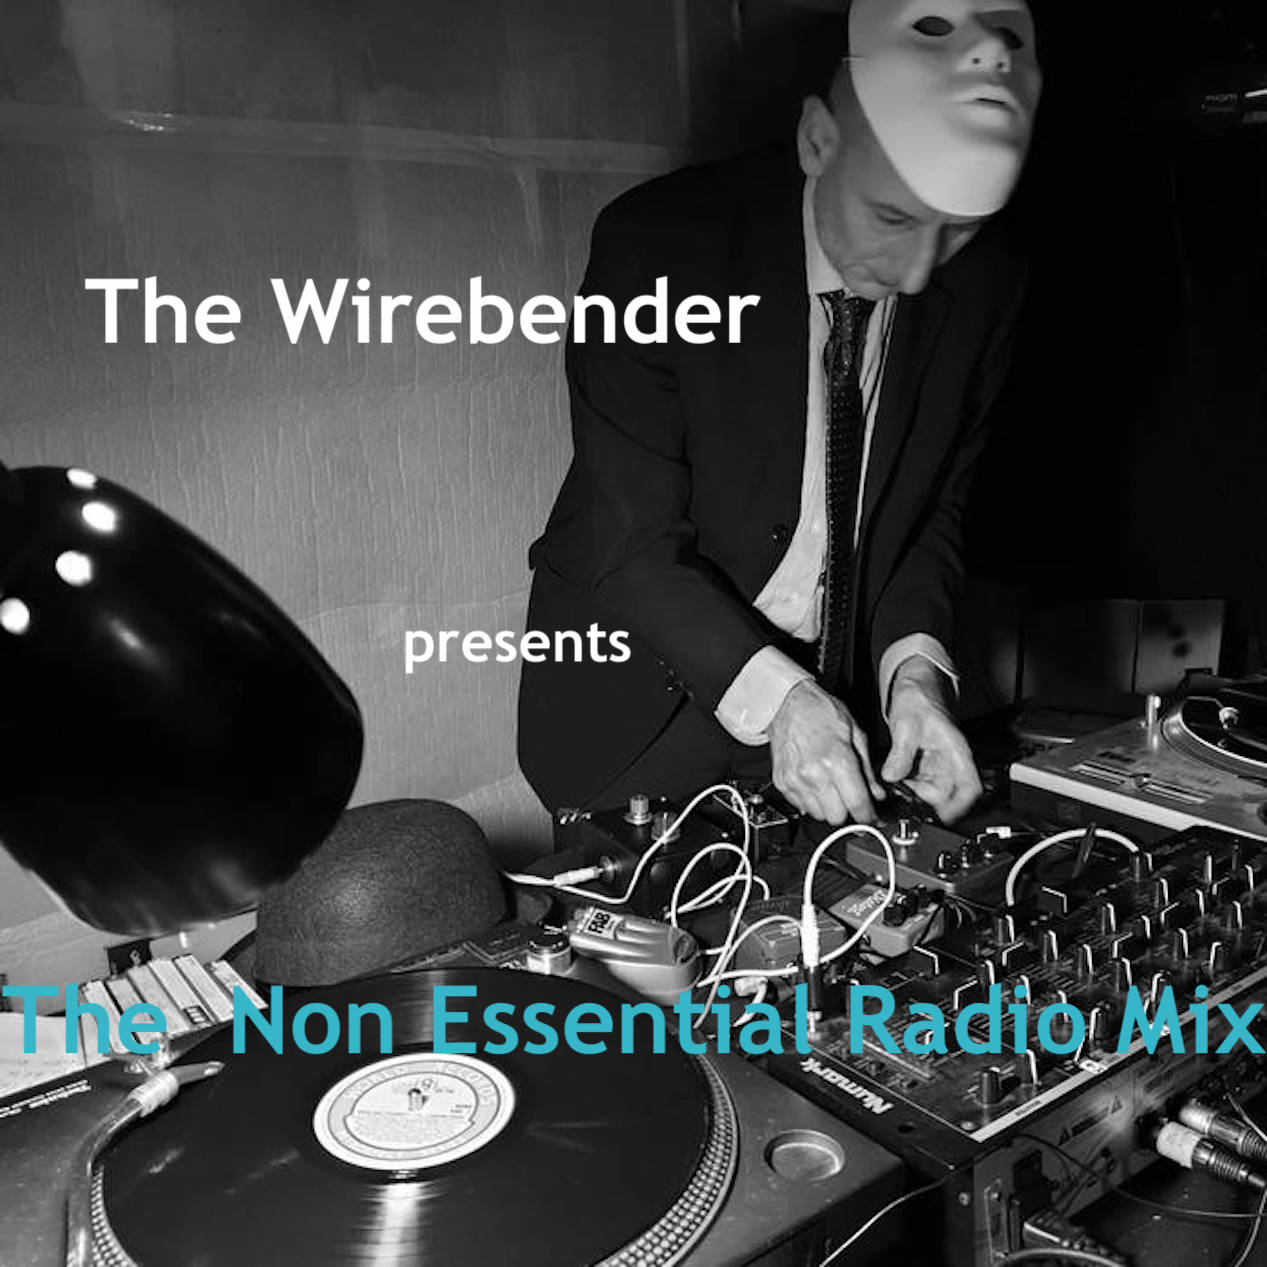 The Wirebender presents The Non Essential Radio Mix